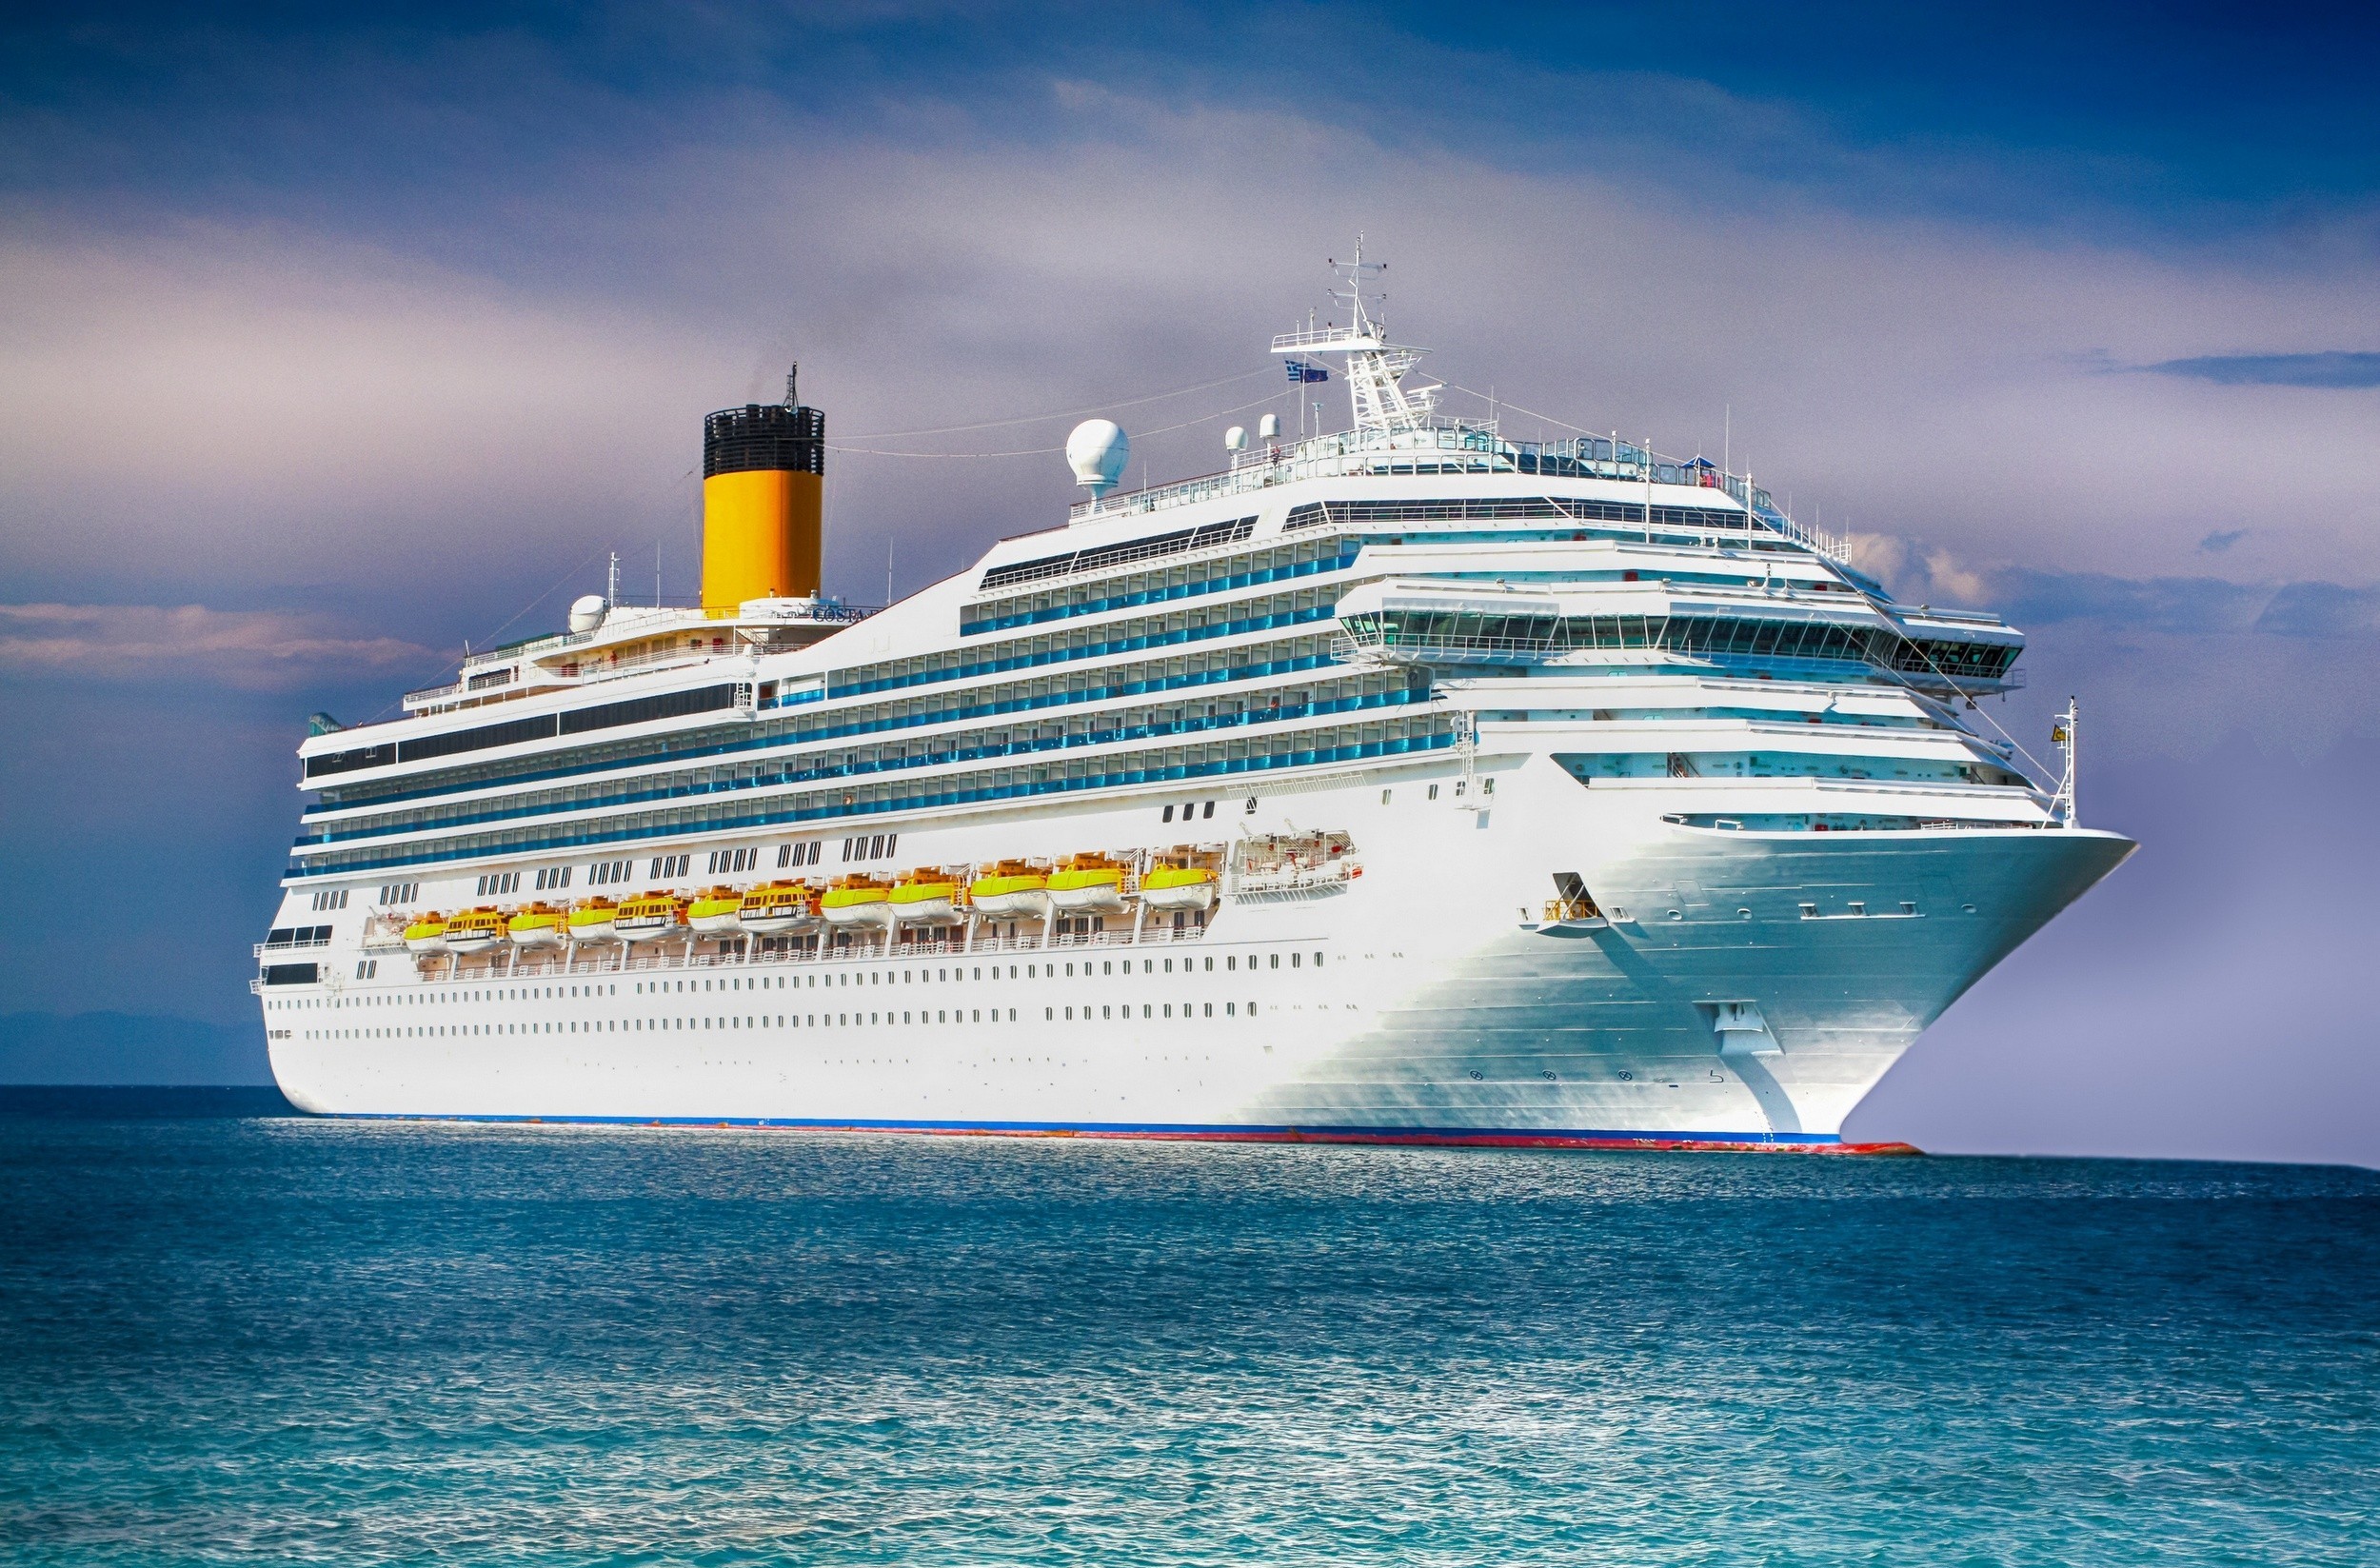 cruise ship wallpaper,cruise ship,water transportation,passenger ship,ship,naval architecture